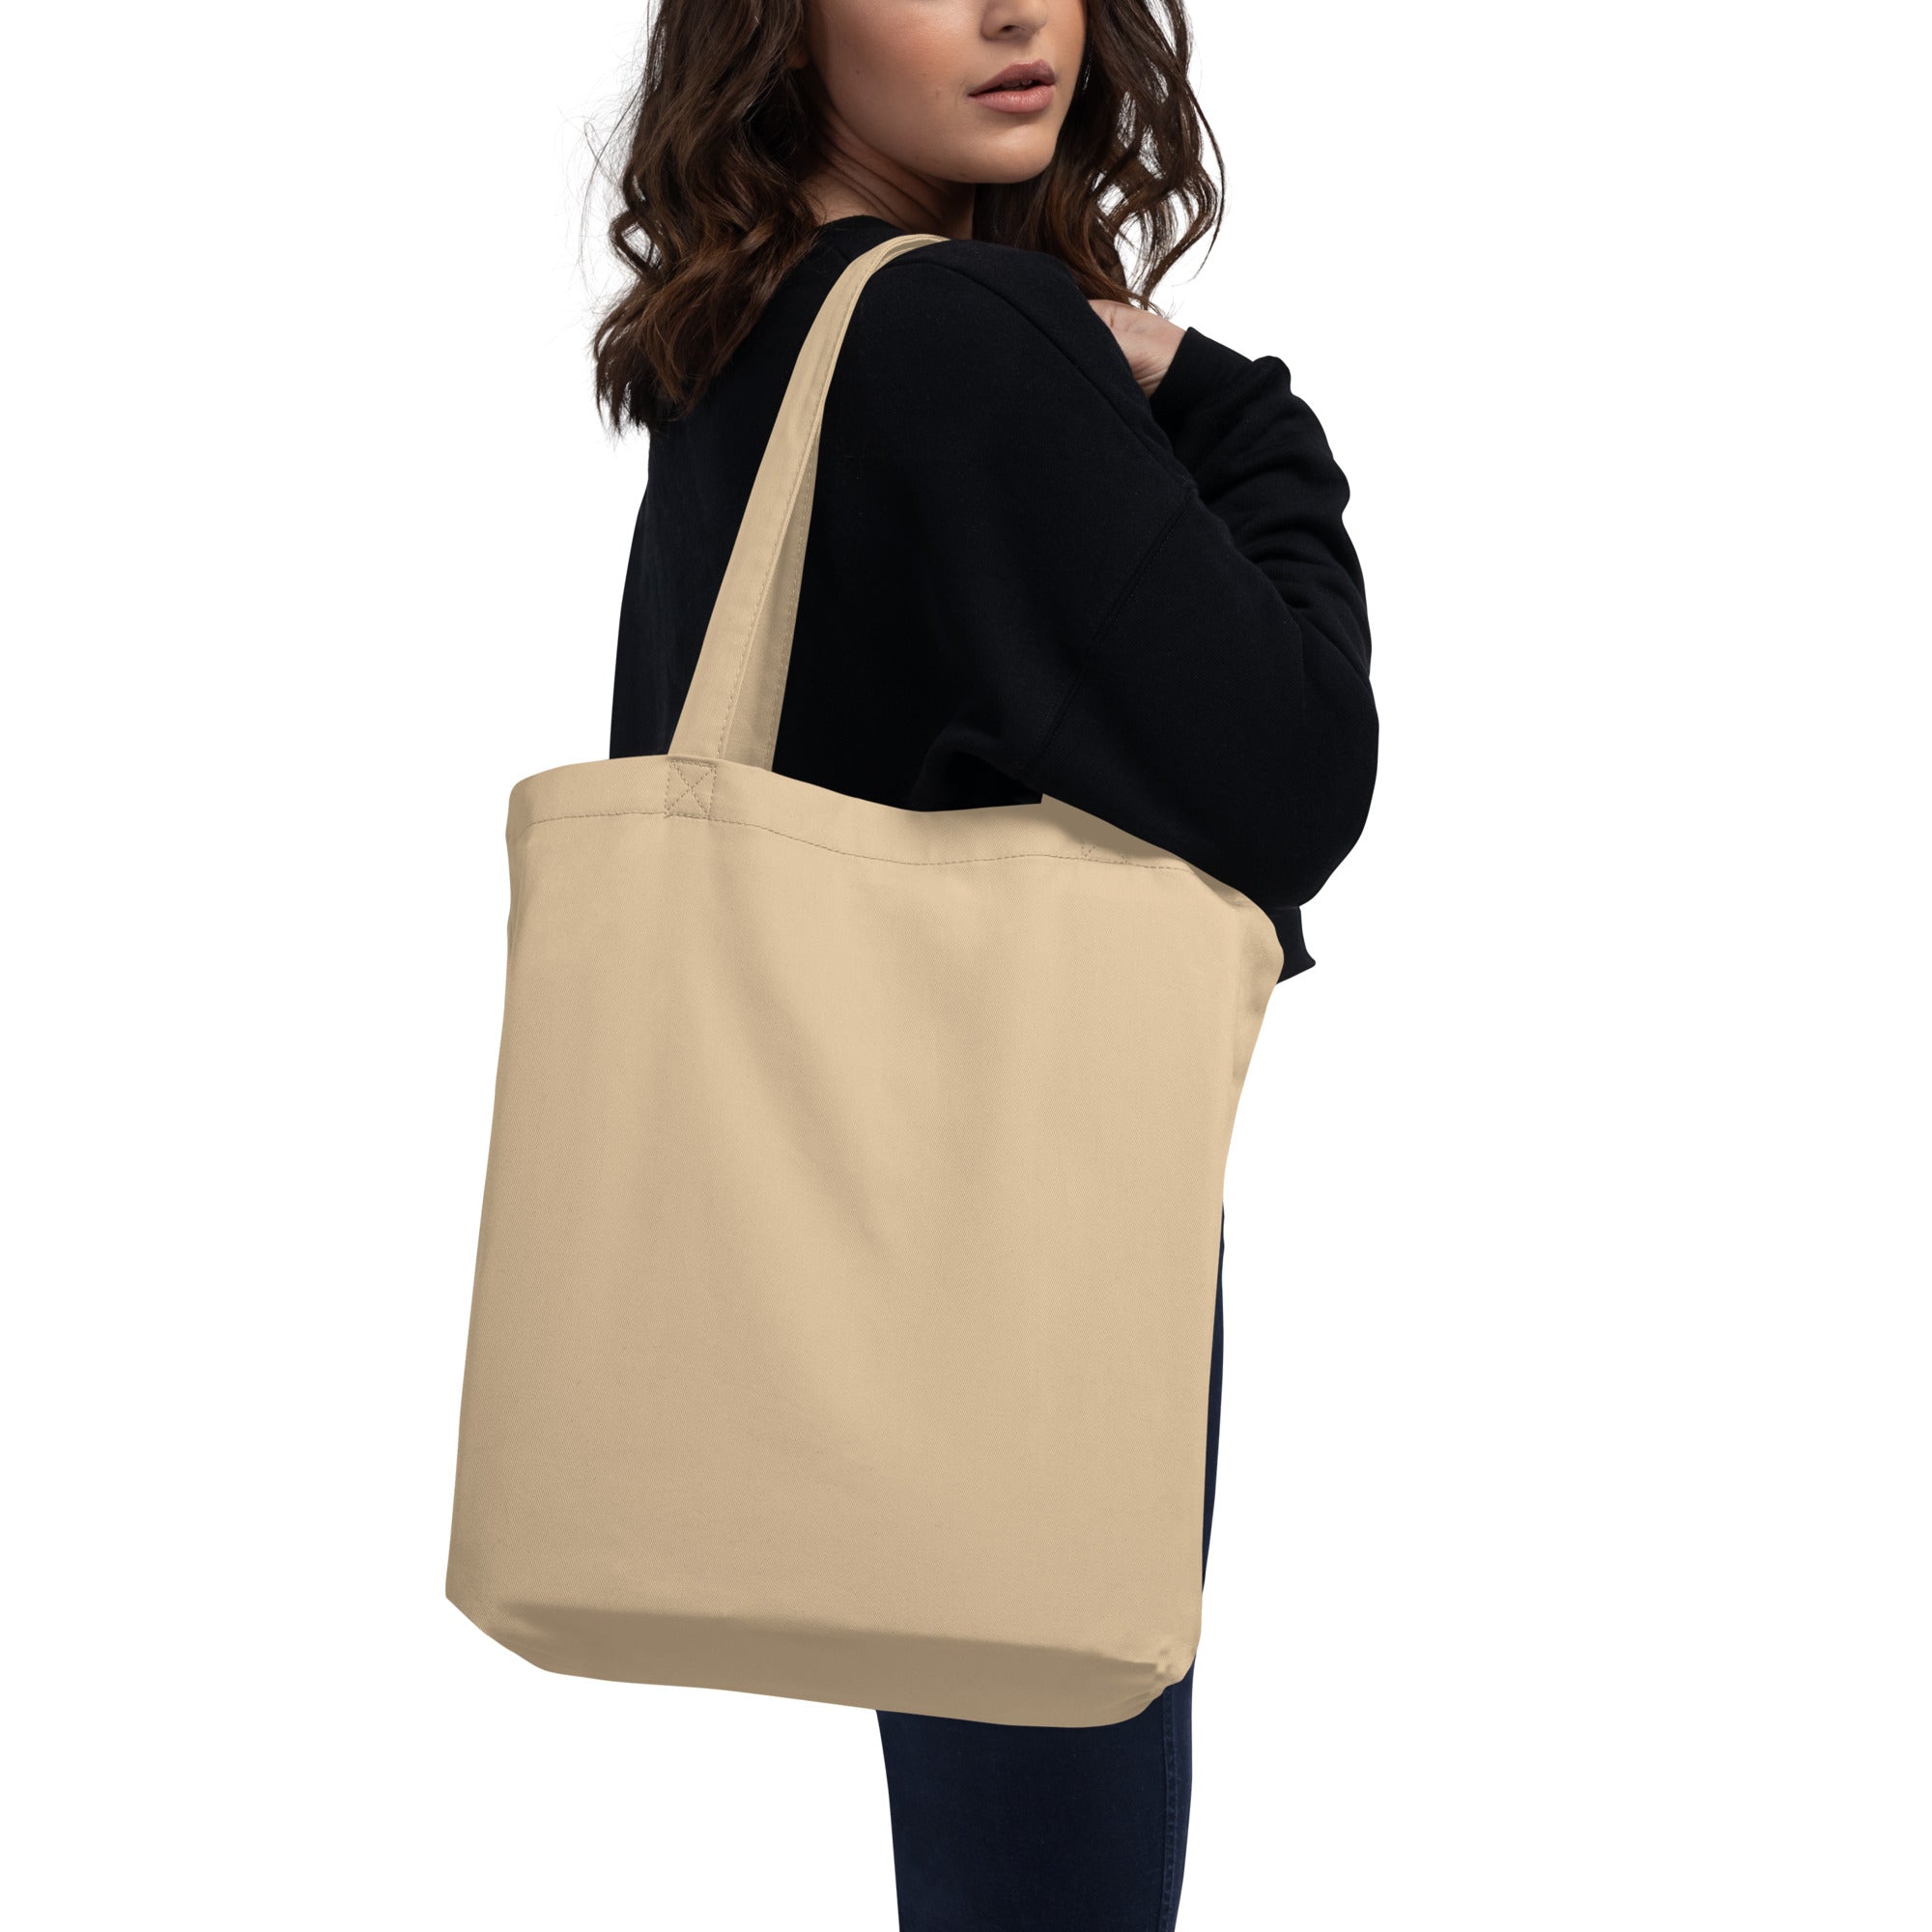 Eco Tote Bag, Shopping, Traveling Bag, Eco Friendly